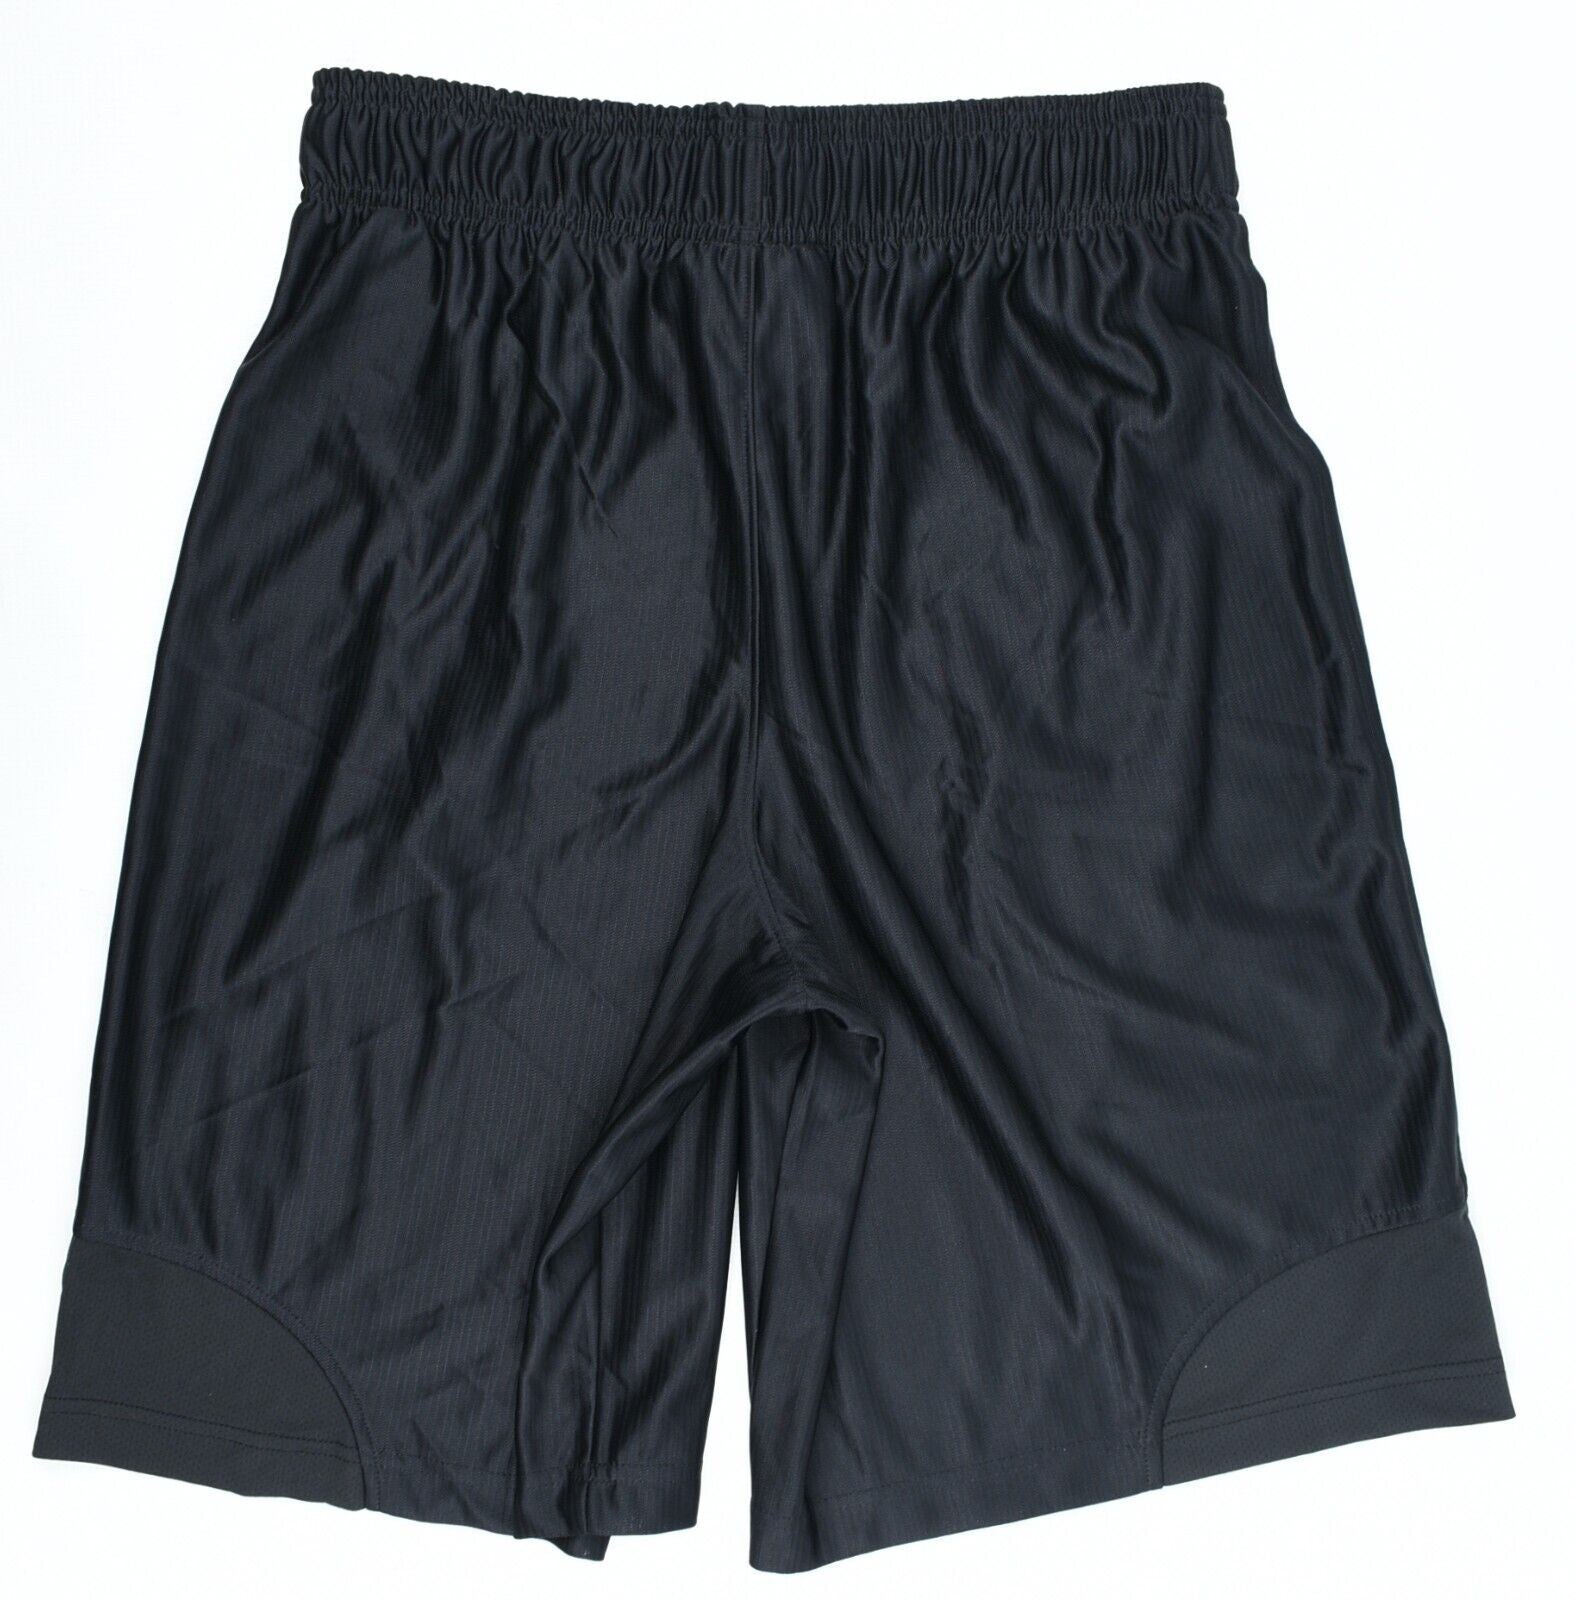 UNDER ARMOUR Men's Perimeter Shorts, Loose Fit, Black/White Logo, size M